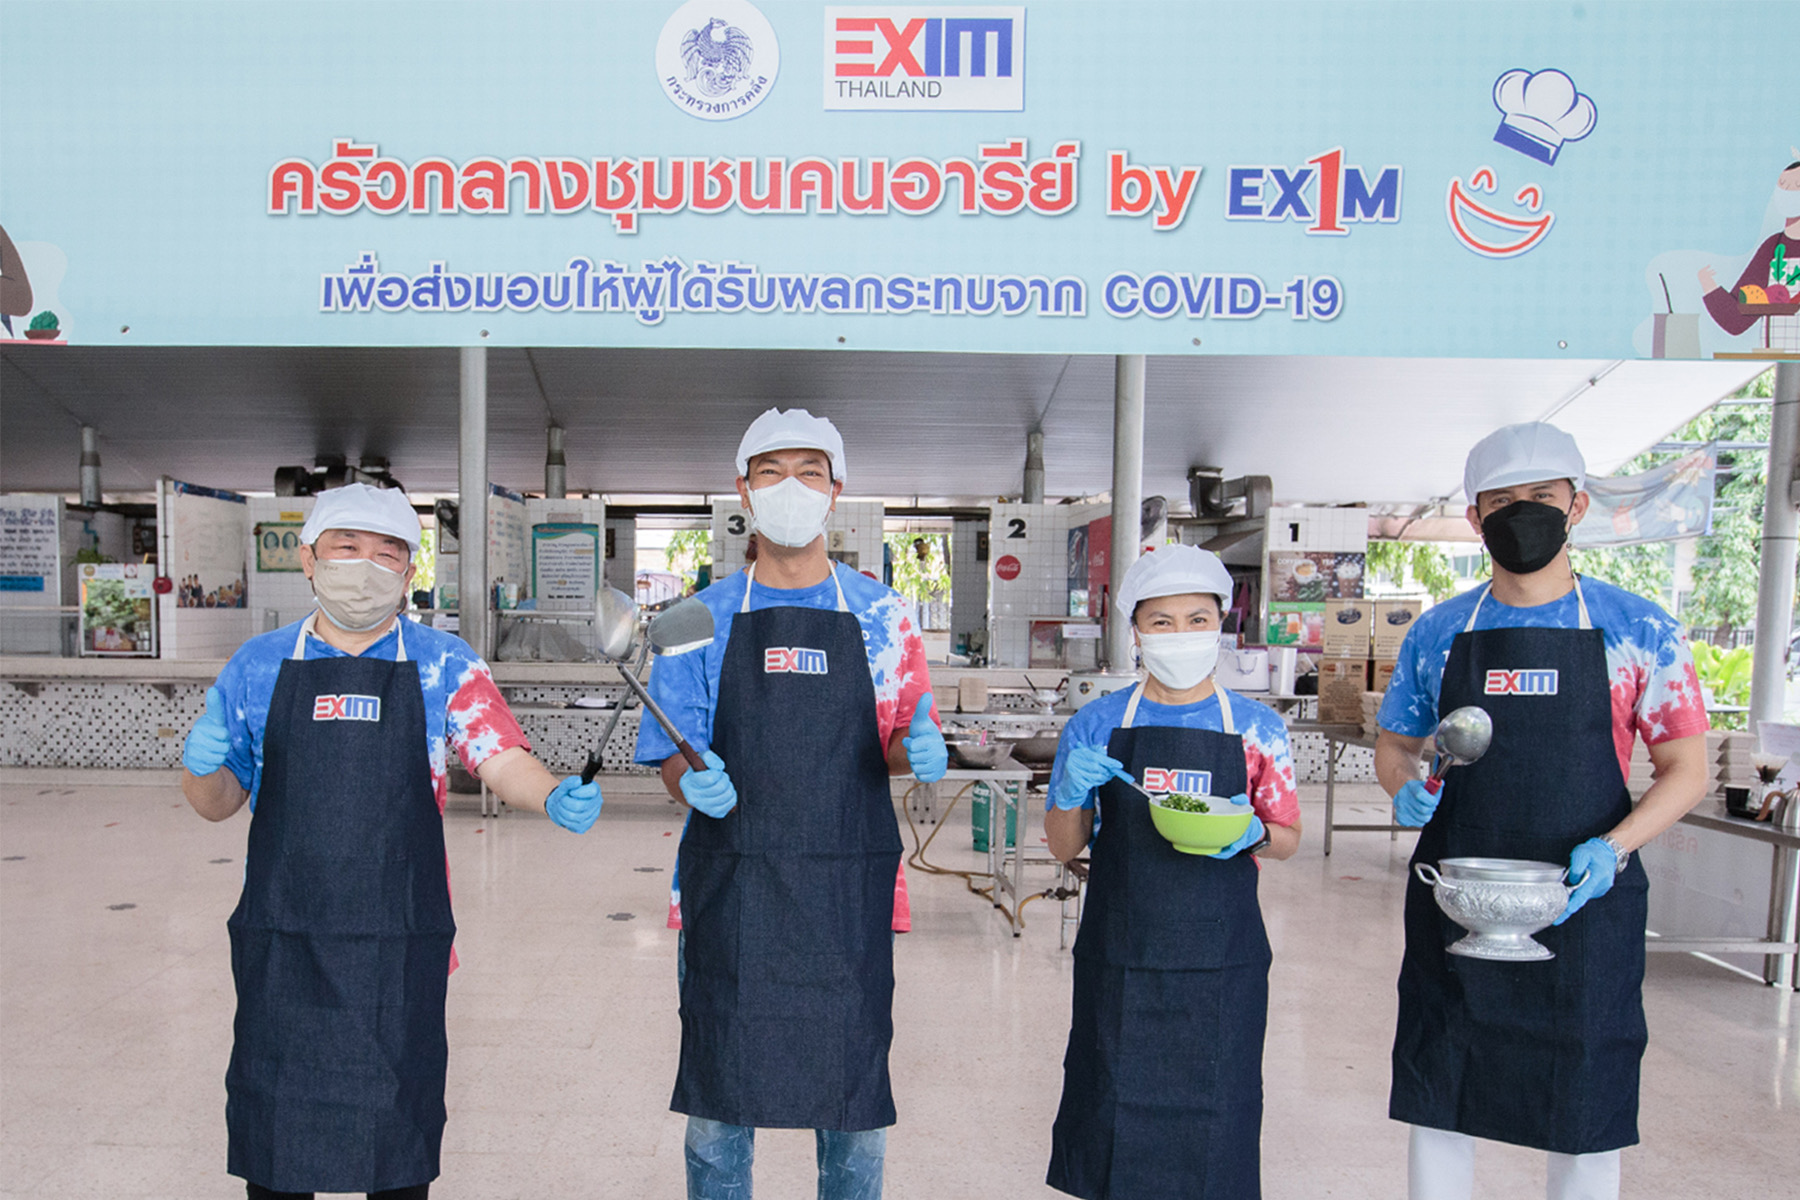 EXIM BANK จับมือลูกค้าและพันธมิตร เปิดโรงครัวกลางชุมชนคนอารีย์ by EXIM